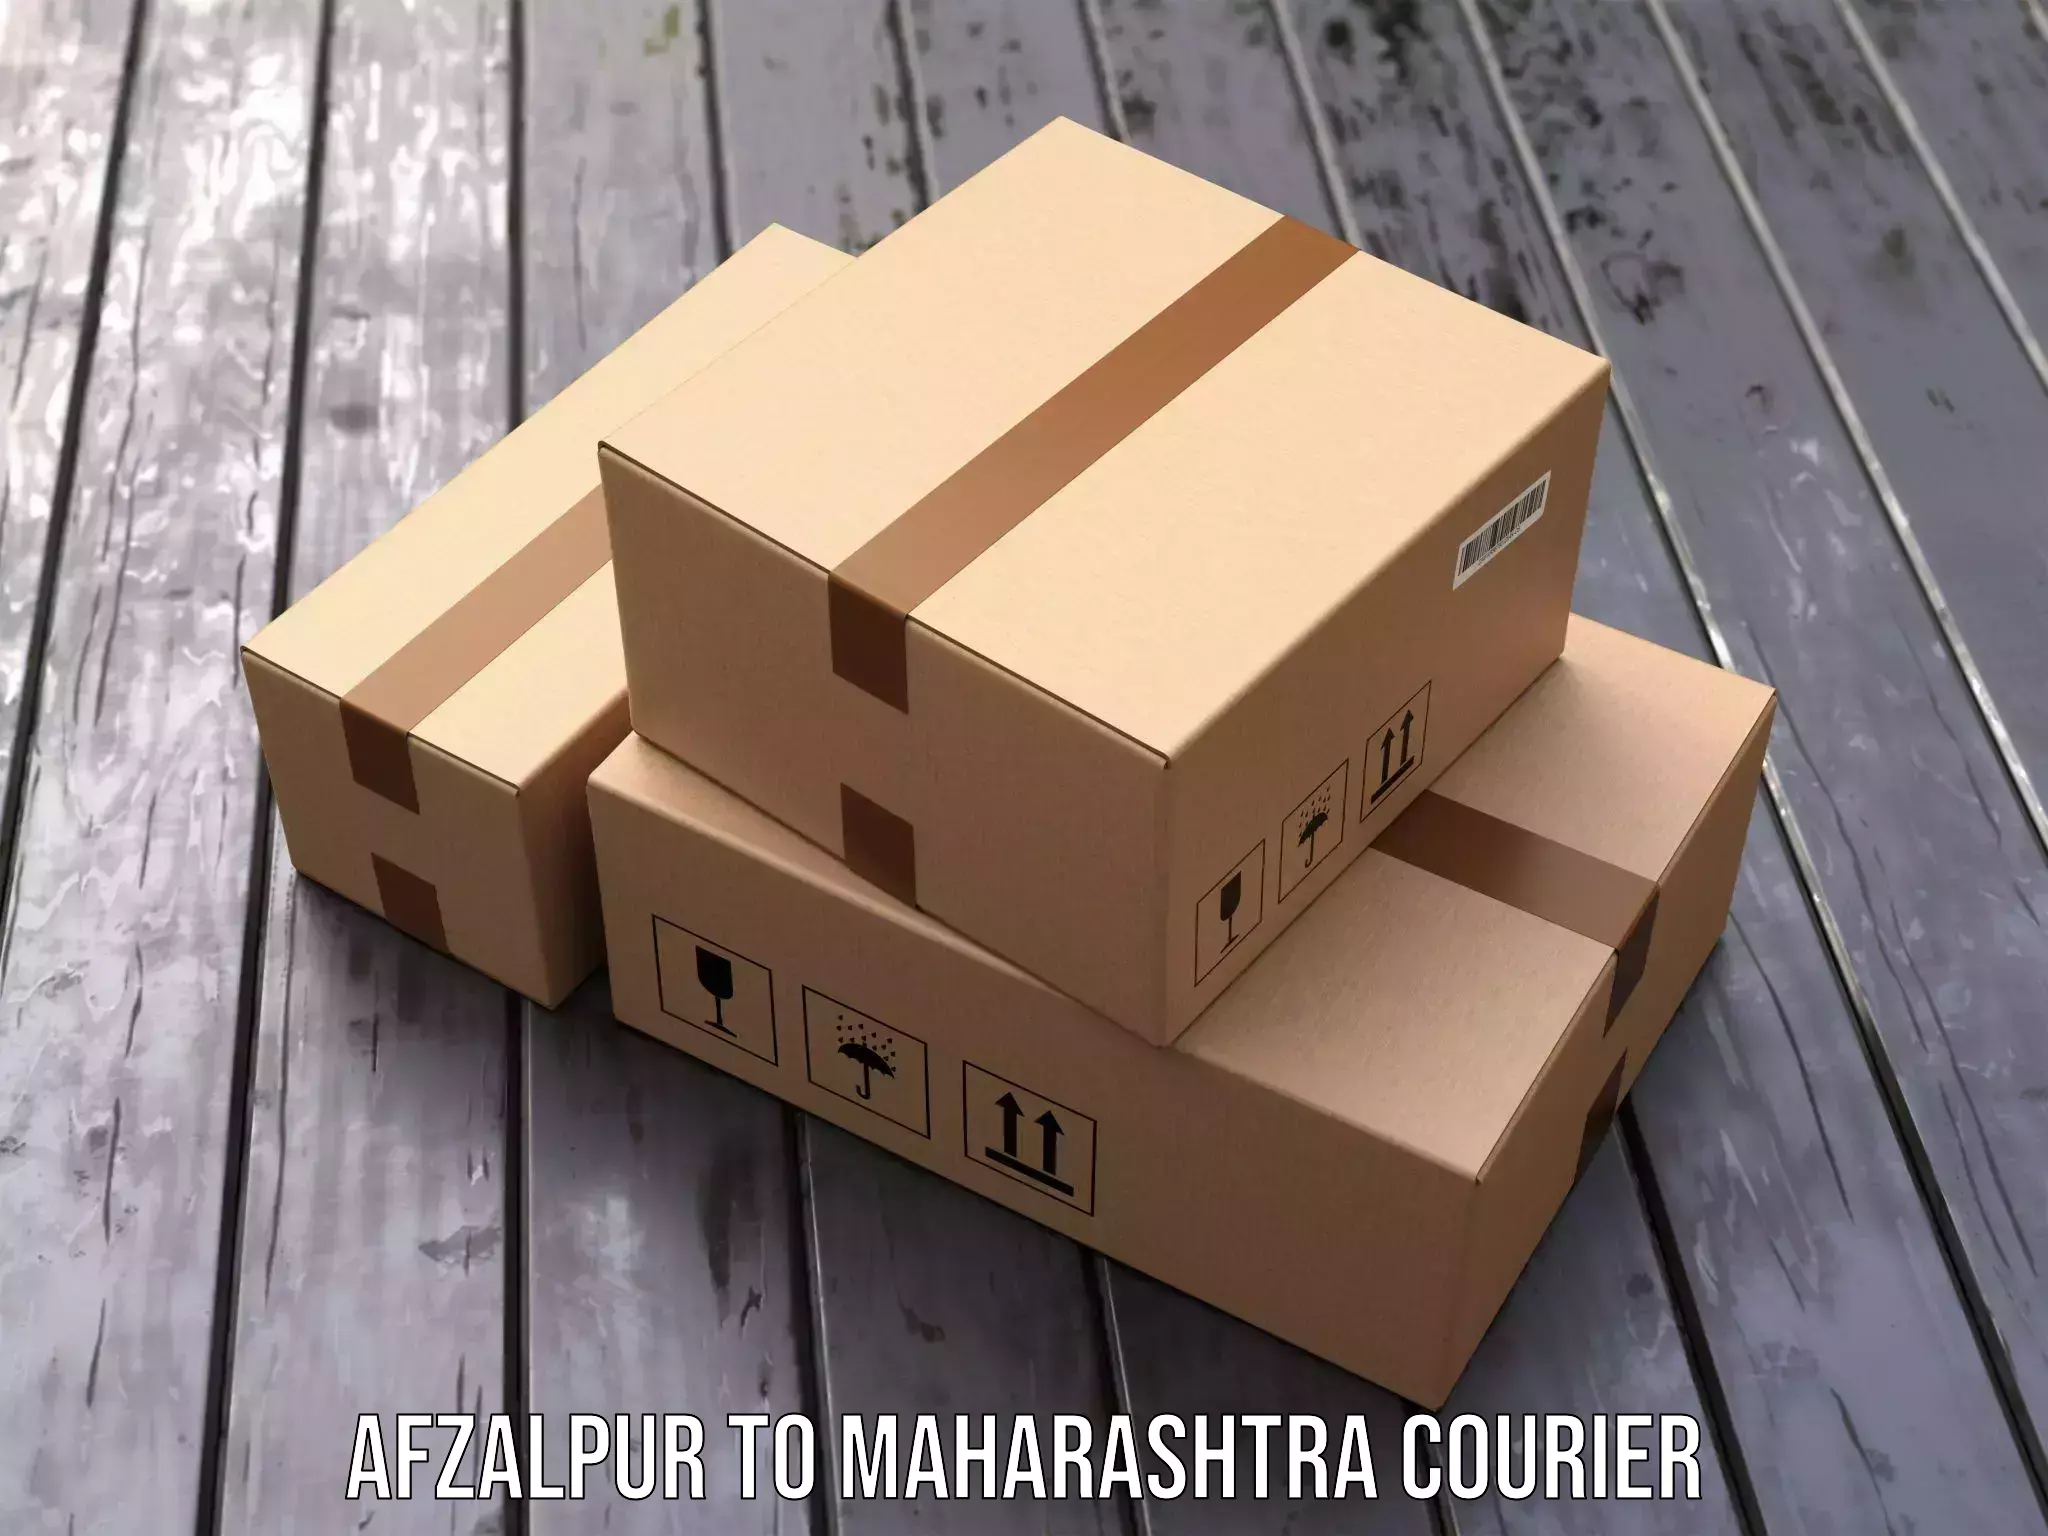 Courier service innovation Afzalpur to Mahur